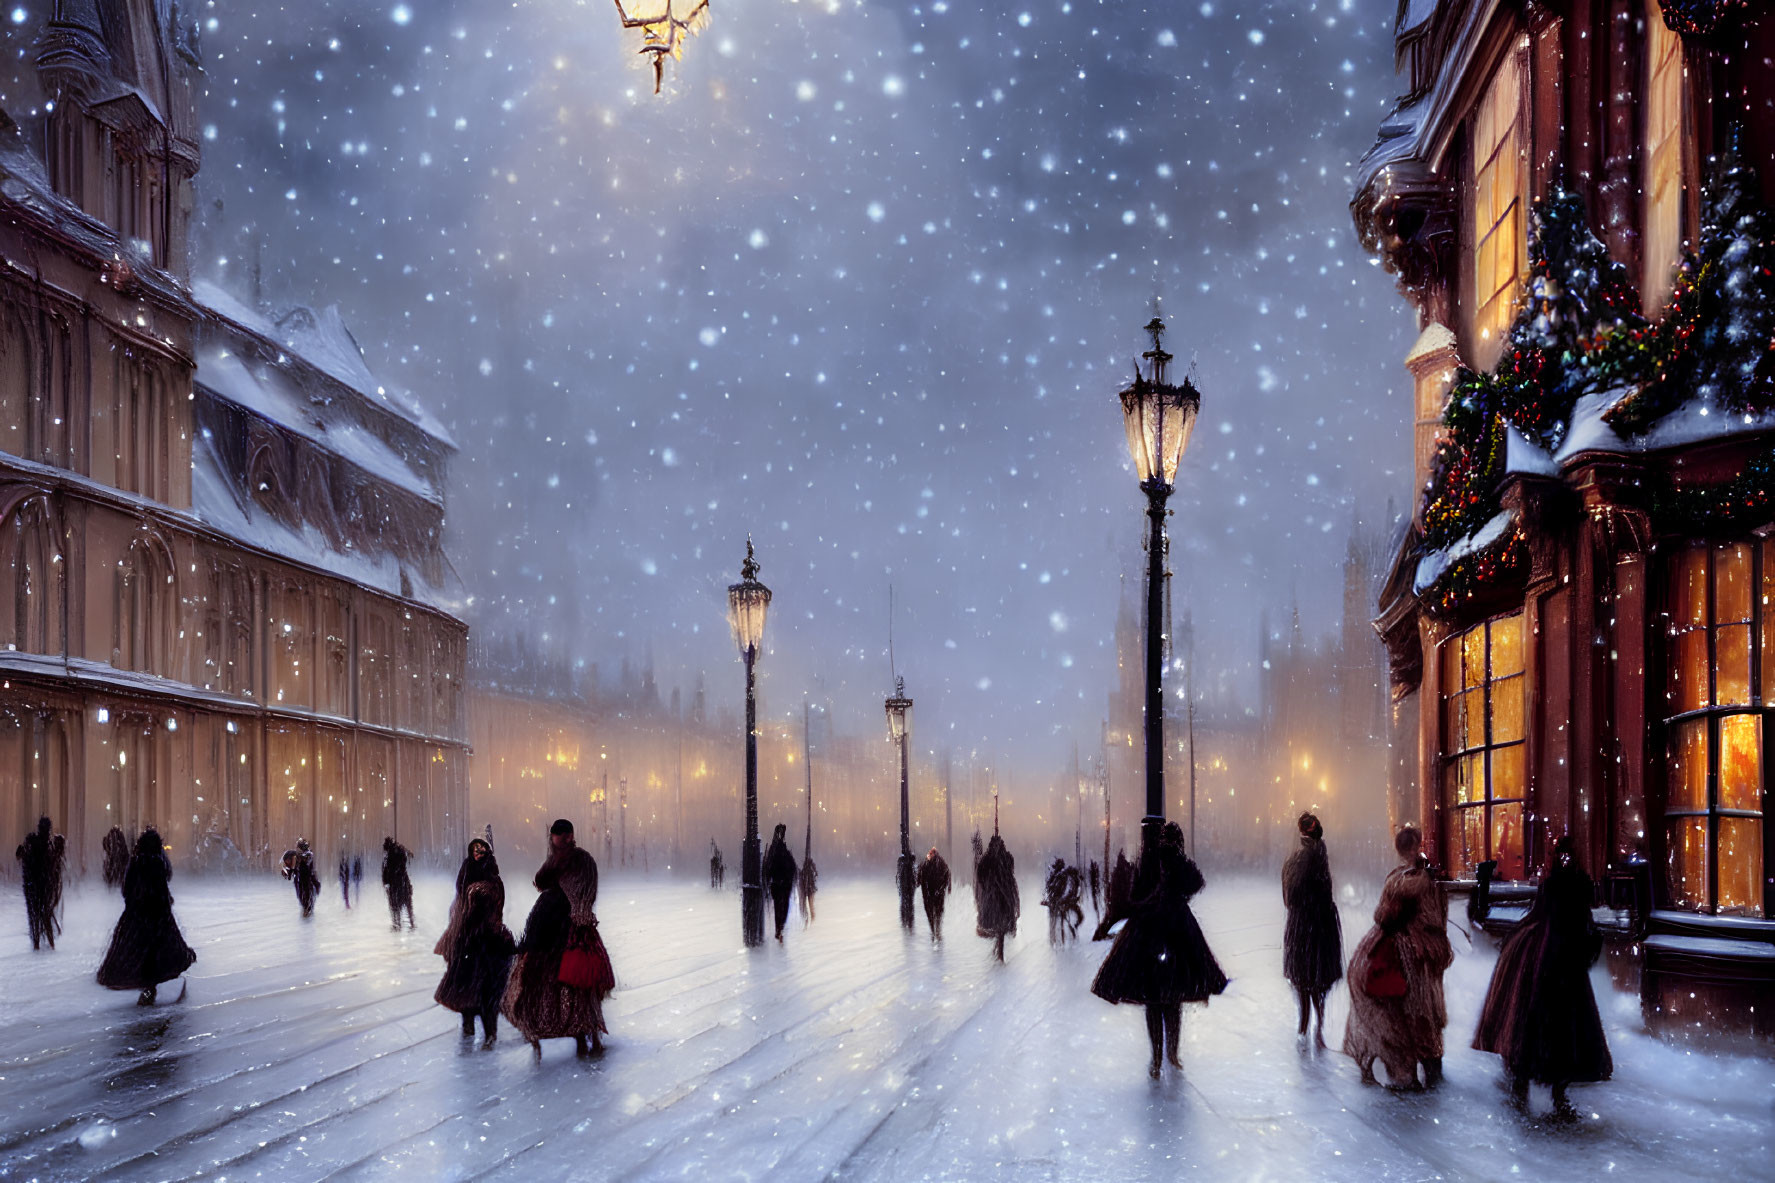 Victorian-era street scene with snow, period attire, lit street lamps & Christmas decorations